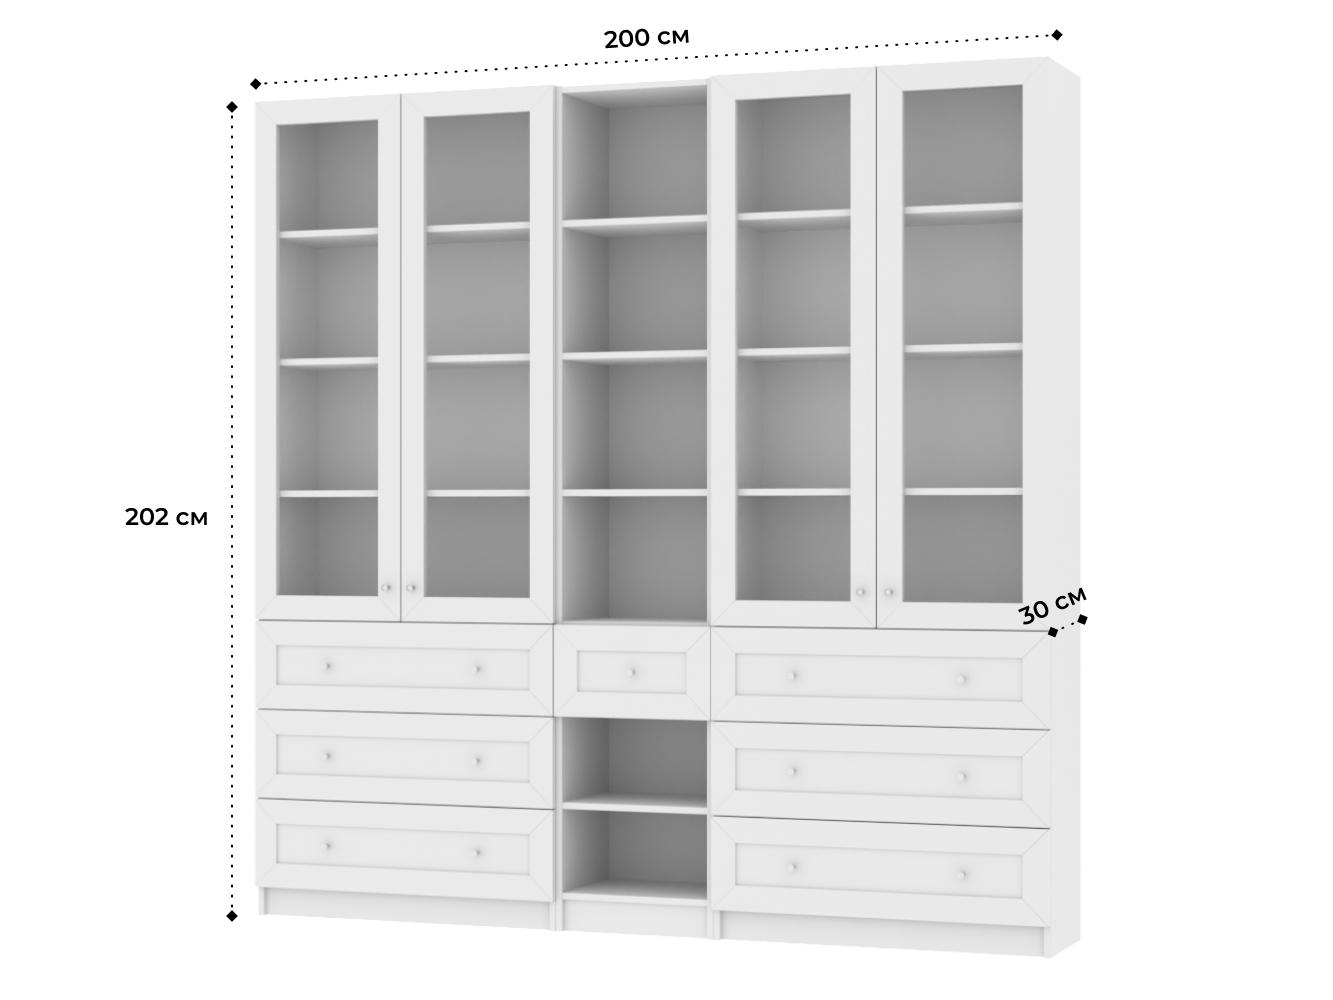 Книжный шкаф Билли 367 white ИКЕА (IKEA) изображение товара